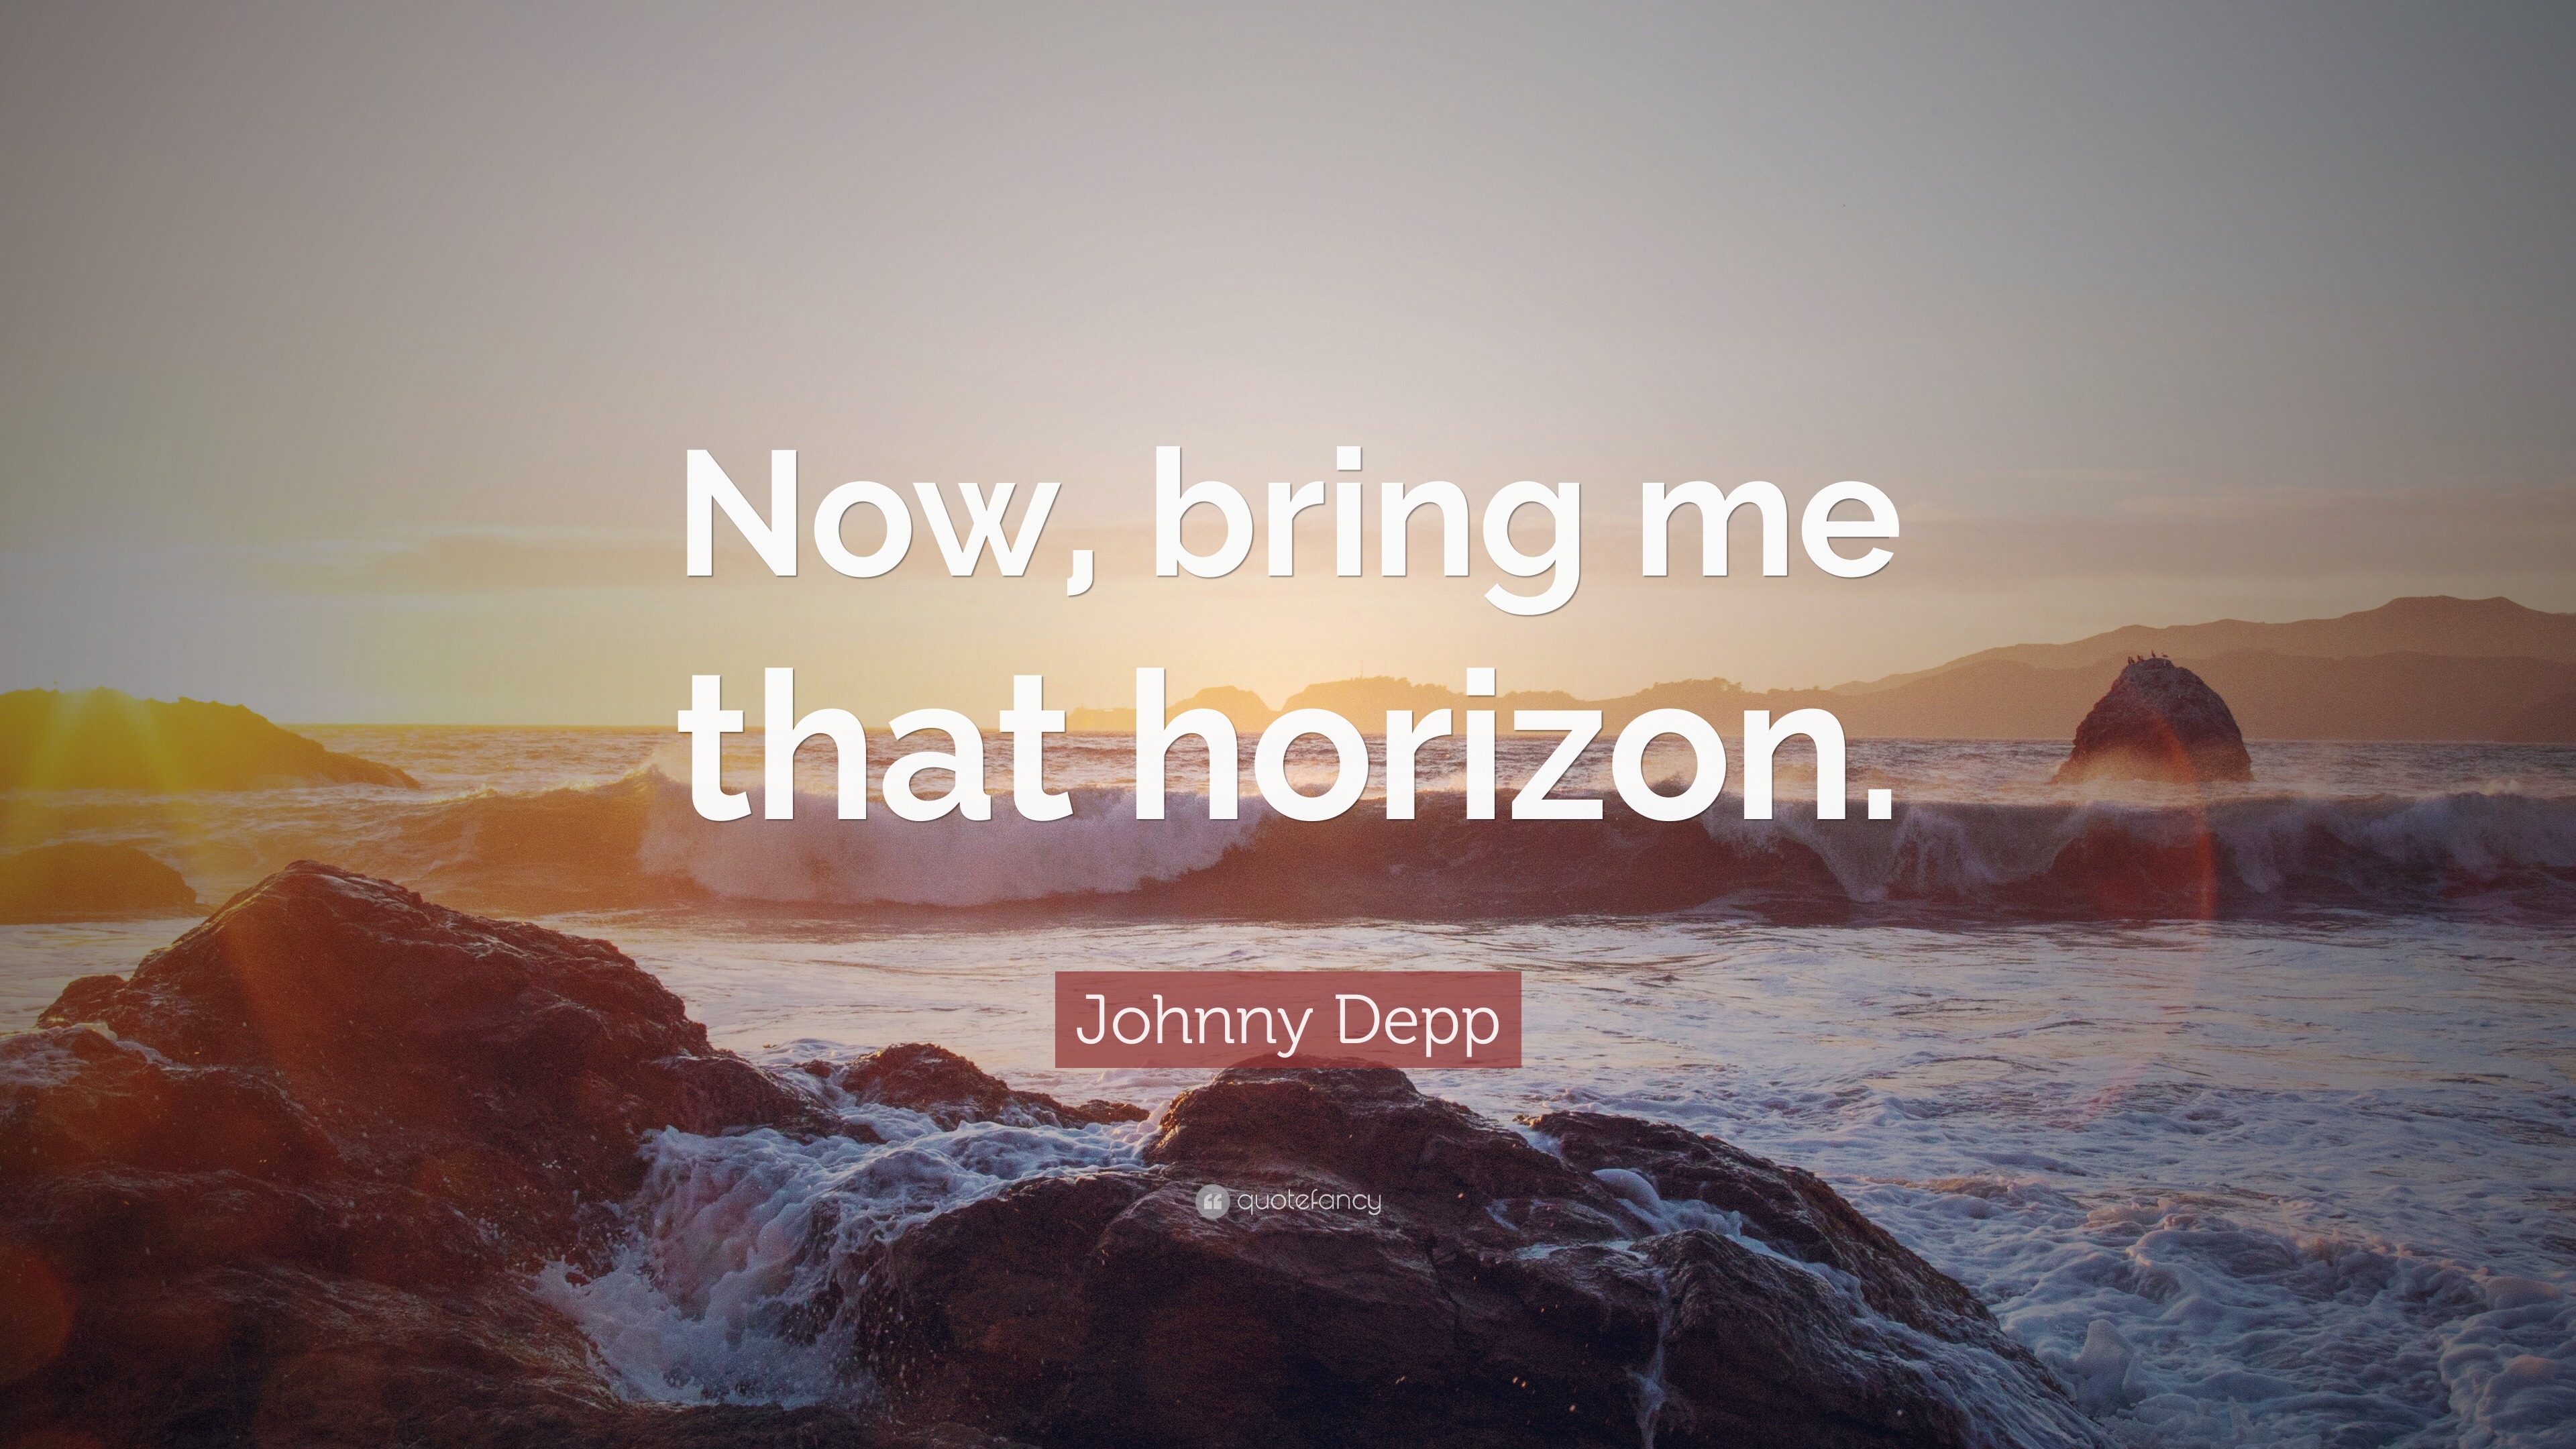 Bring Me The Horizon Quotes - Bring Me The Horizon Quotes